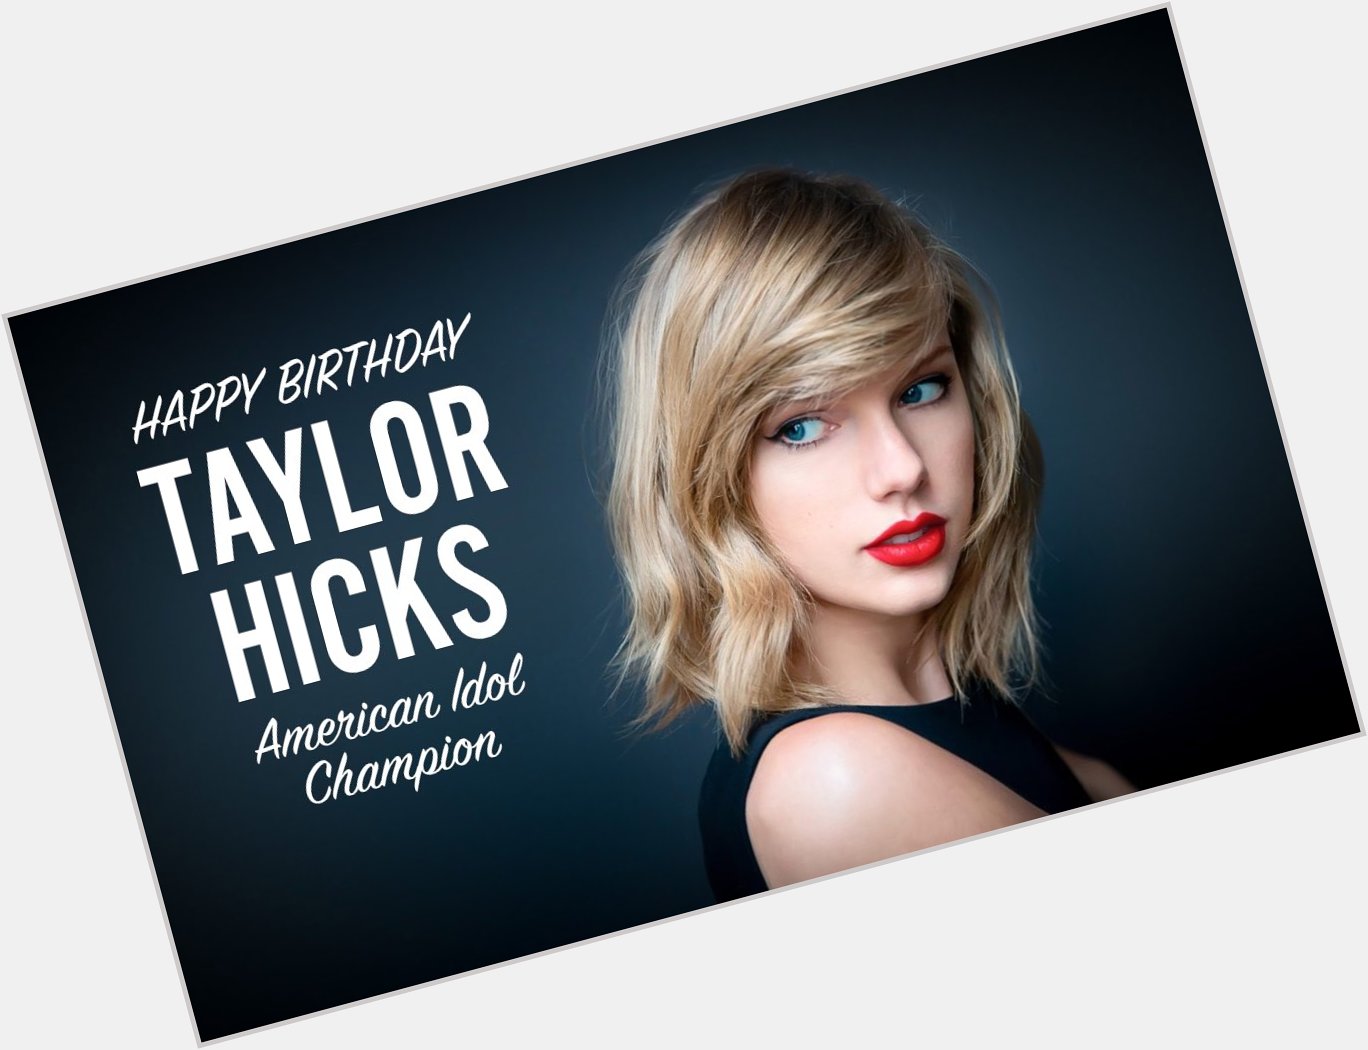 Happy Birthday Taylor Hicks - American Idol Champion! 